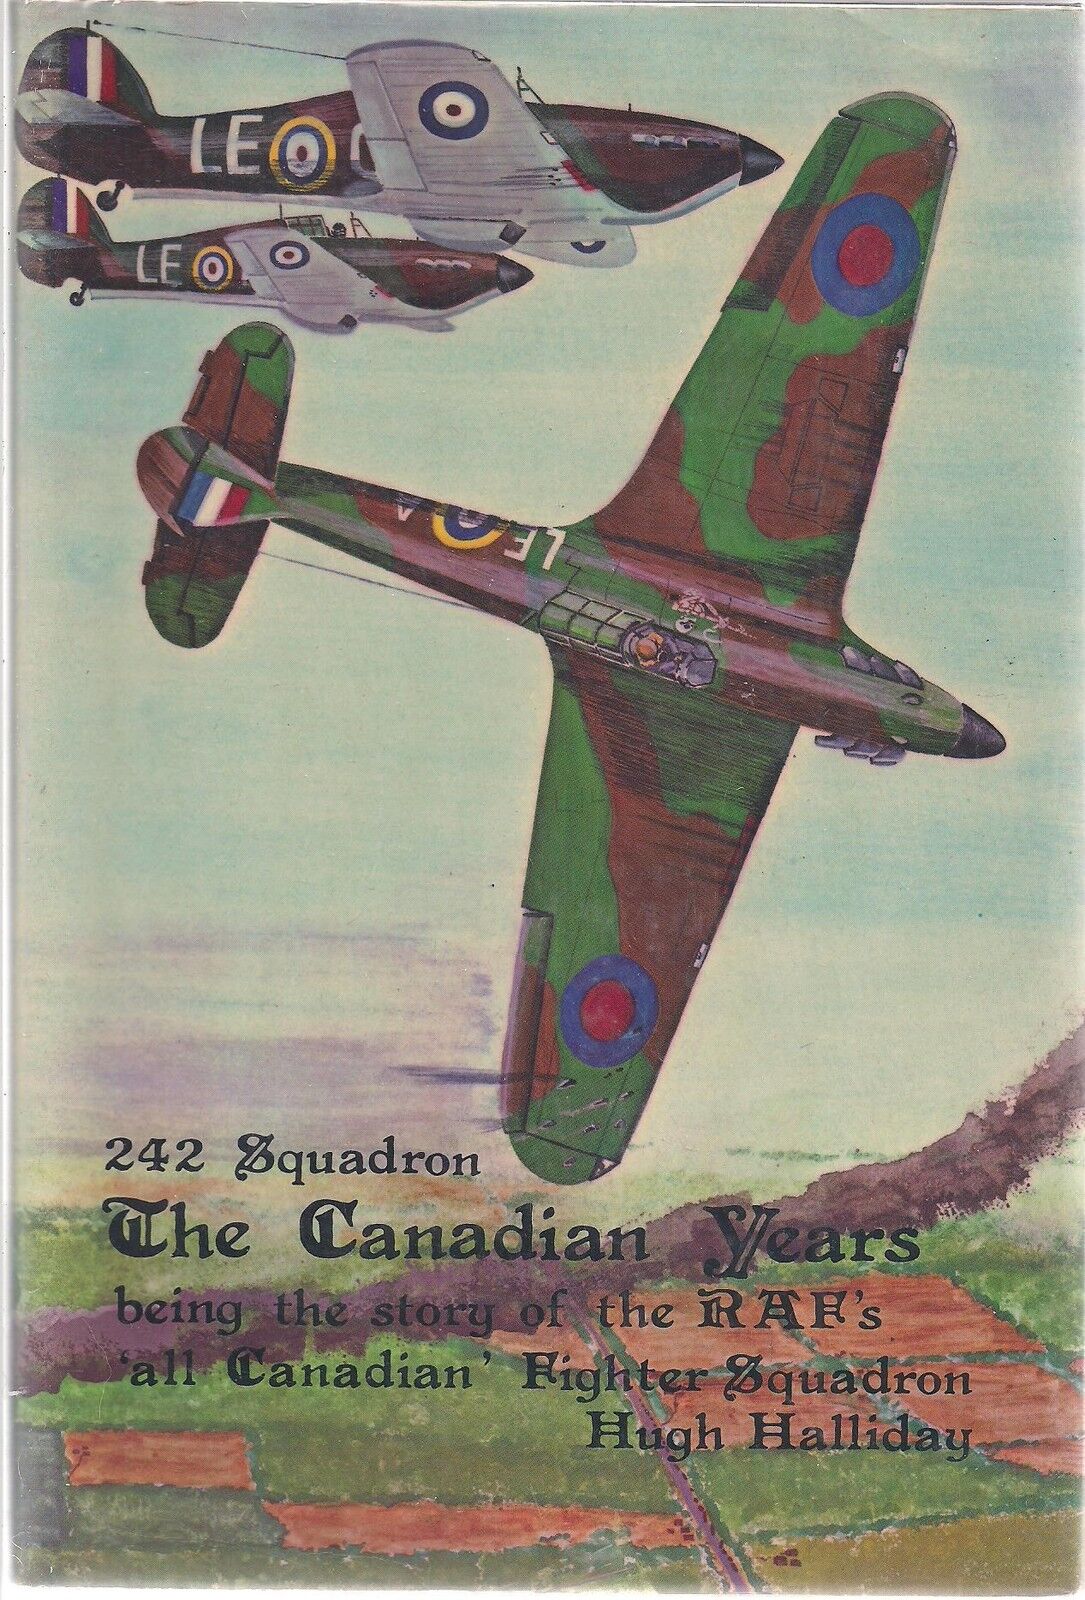 RAF 242 Squadron: The Canadain Years by Hugh Halliday